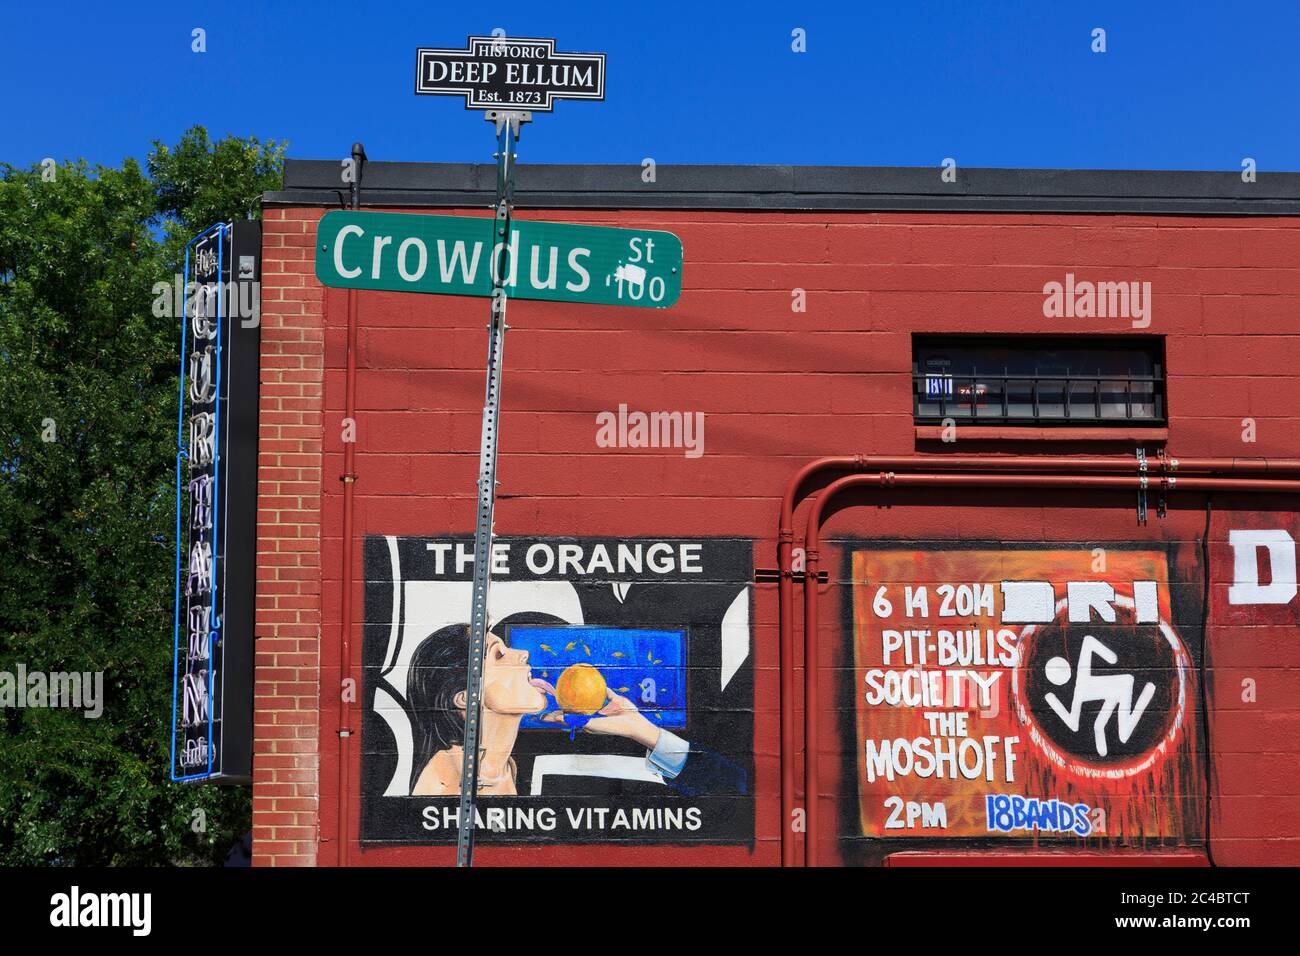 Crowdus Street, Deep Ellum District, Dallas, Texas, USA Stock Photo